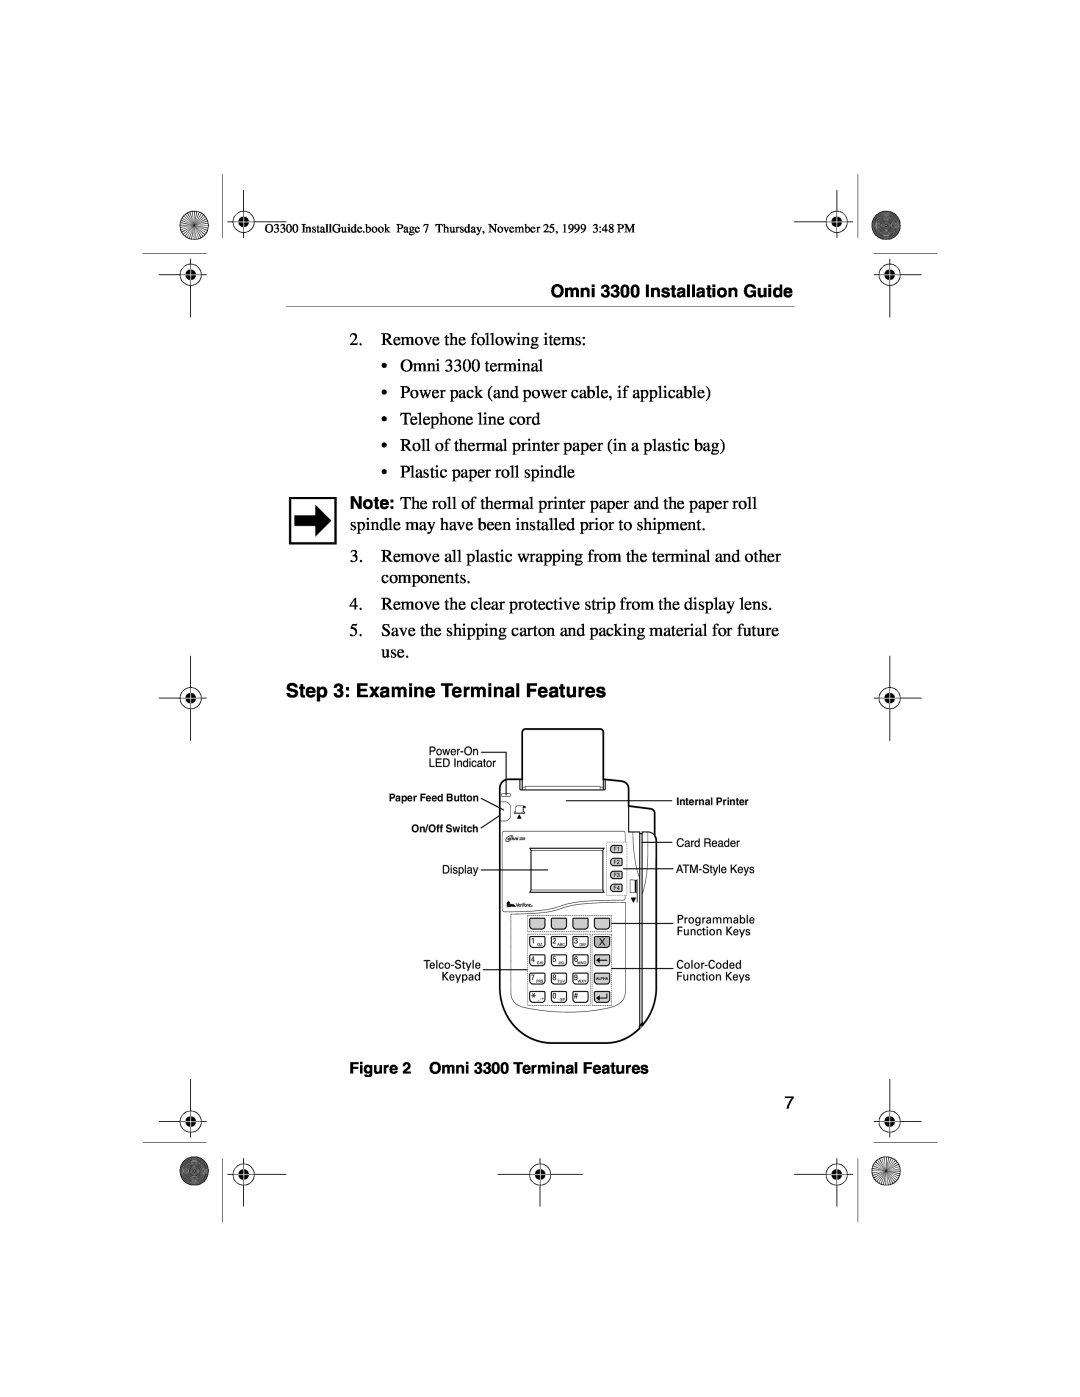 VeriFone manual Examine Terminal Features, Omni 3300 Installation Guide 